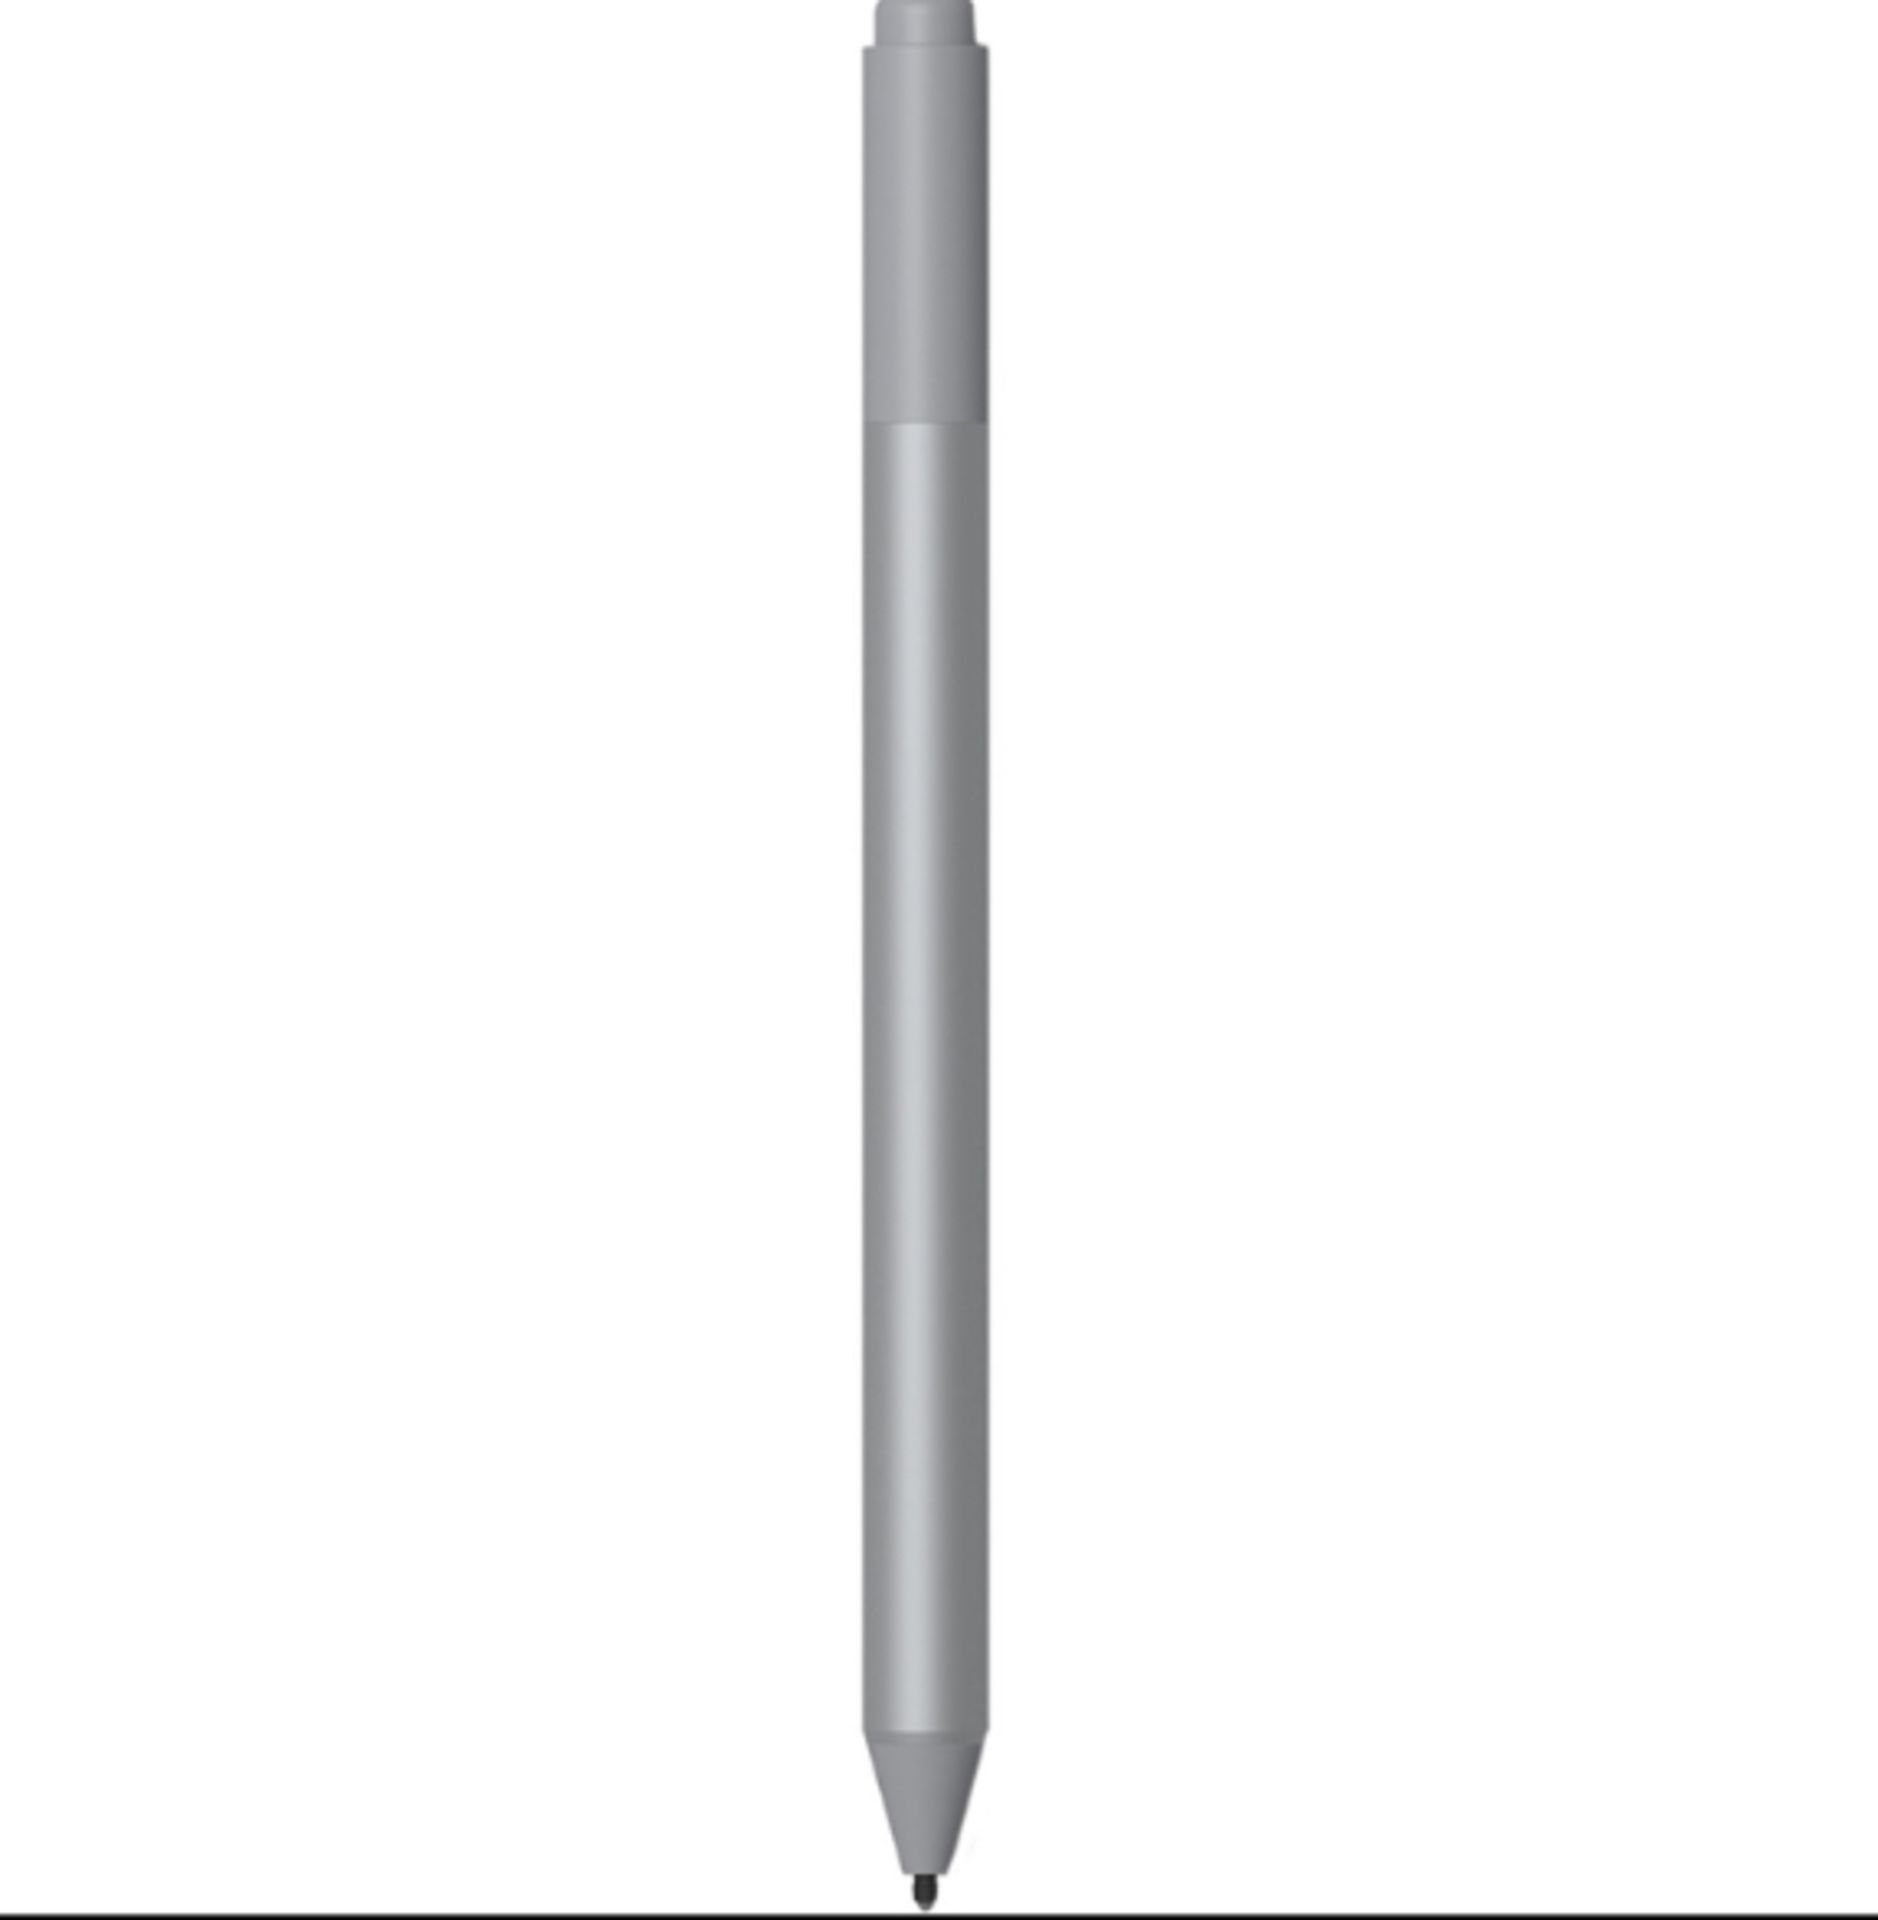 Grey microsoft surface pen